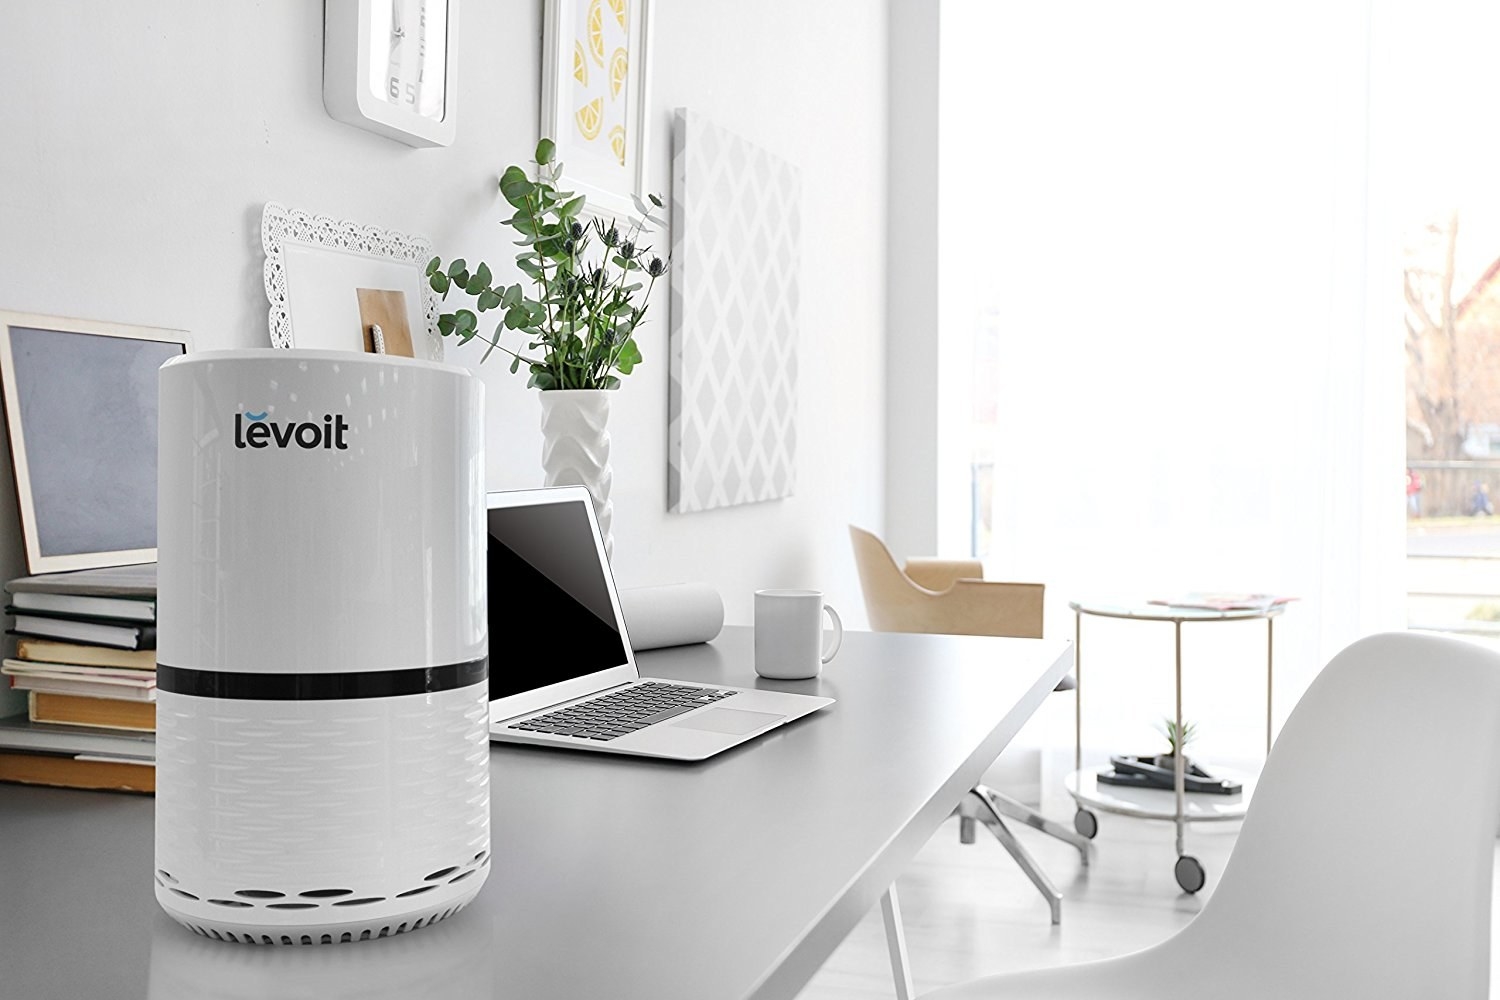 levoit air purifier sitting on a desk